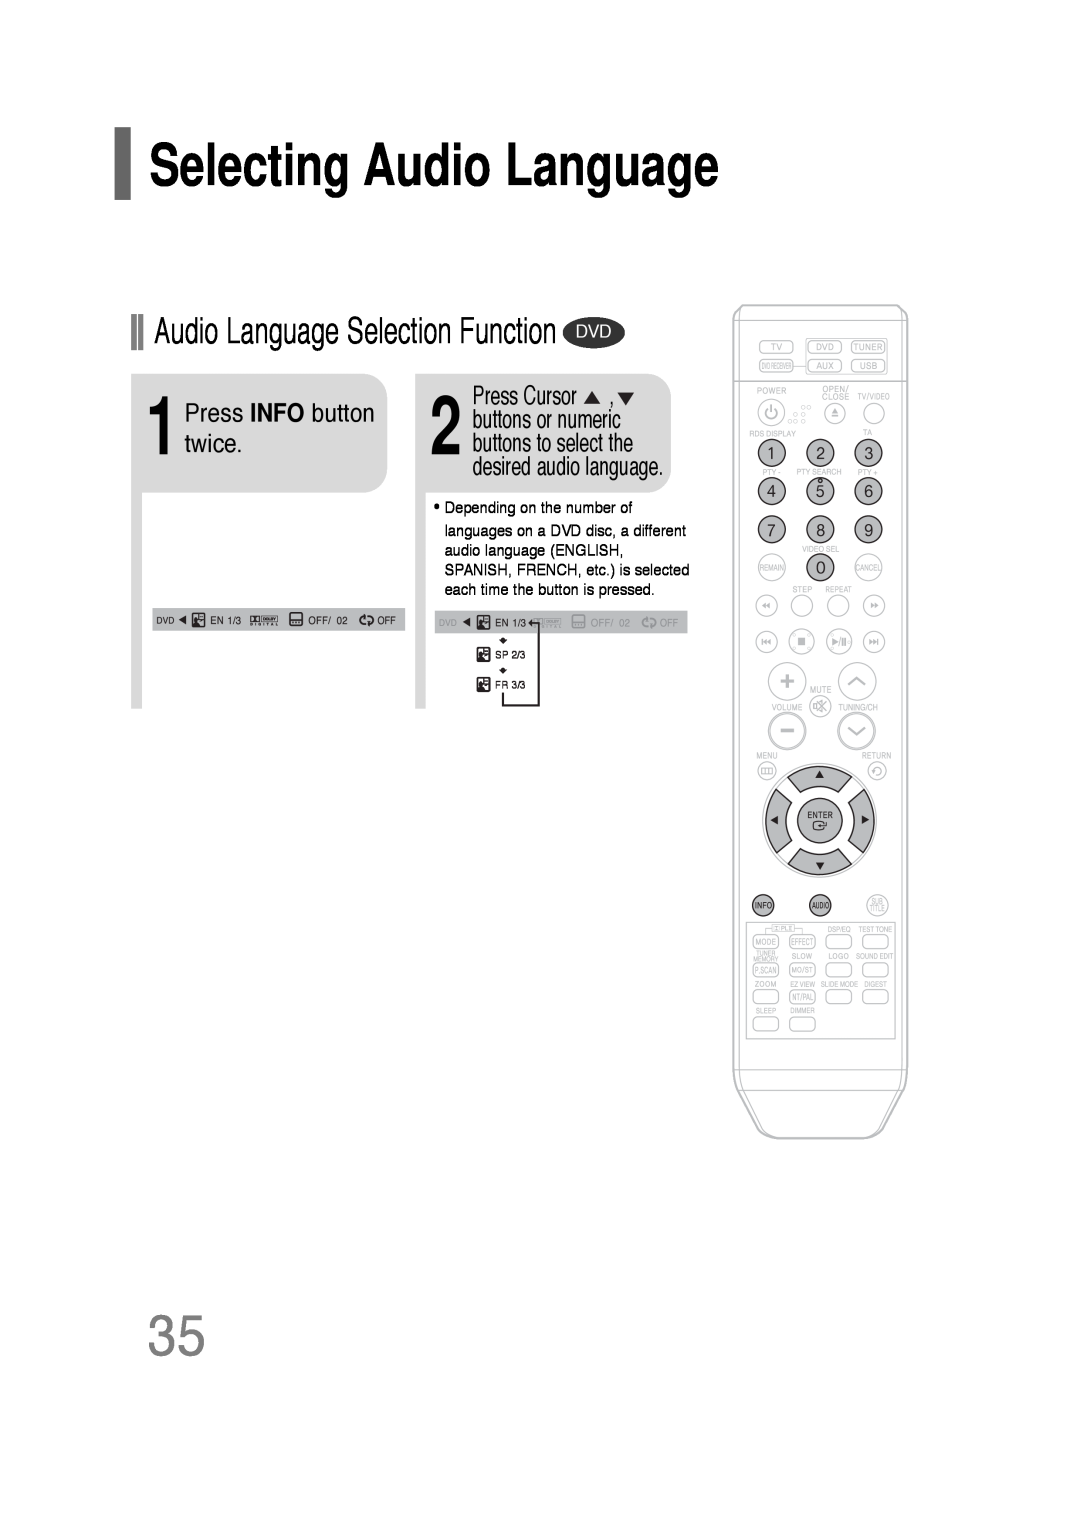 Samsung HT-Q20 Selecting Audio Language, Audio Language Selection Function DVD, 1Press INFO button twice, SP 2/3 FR 3/3 